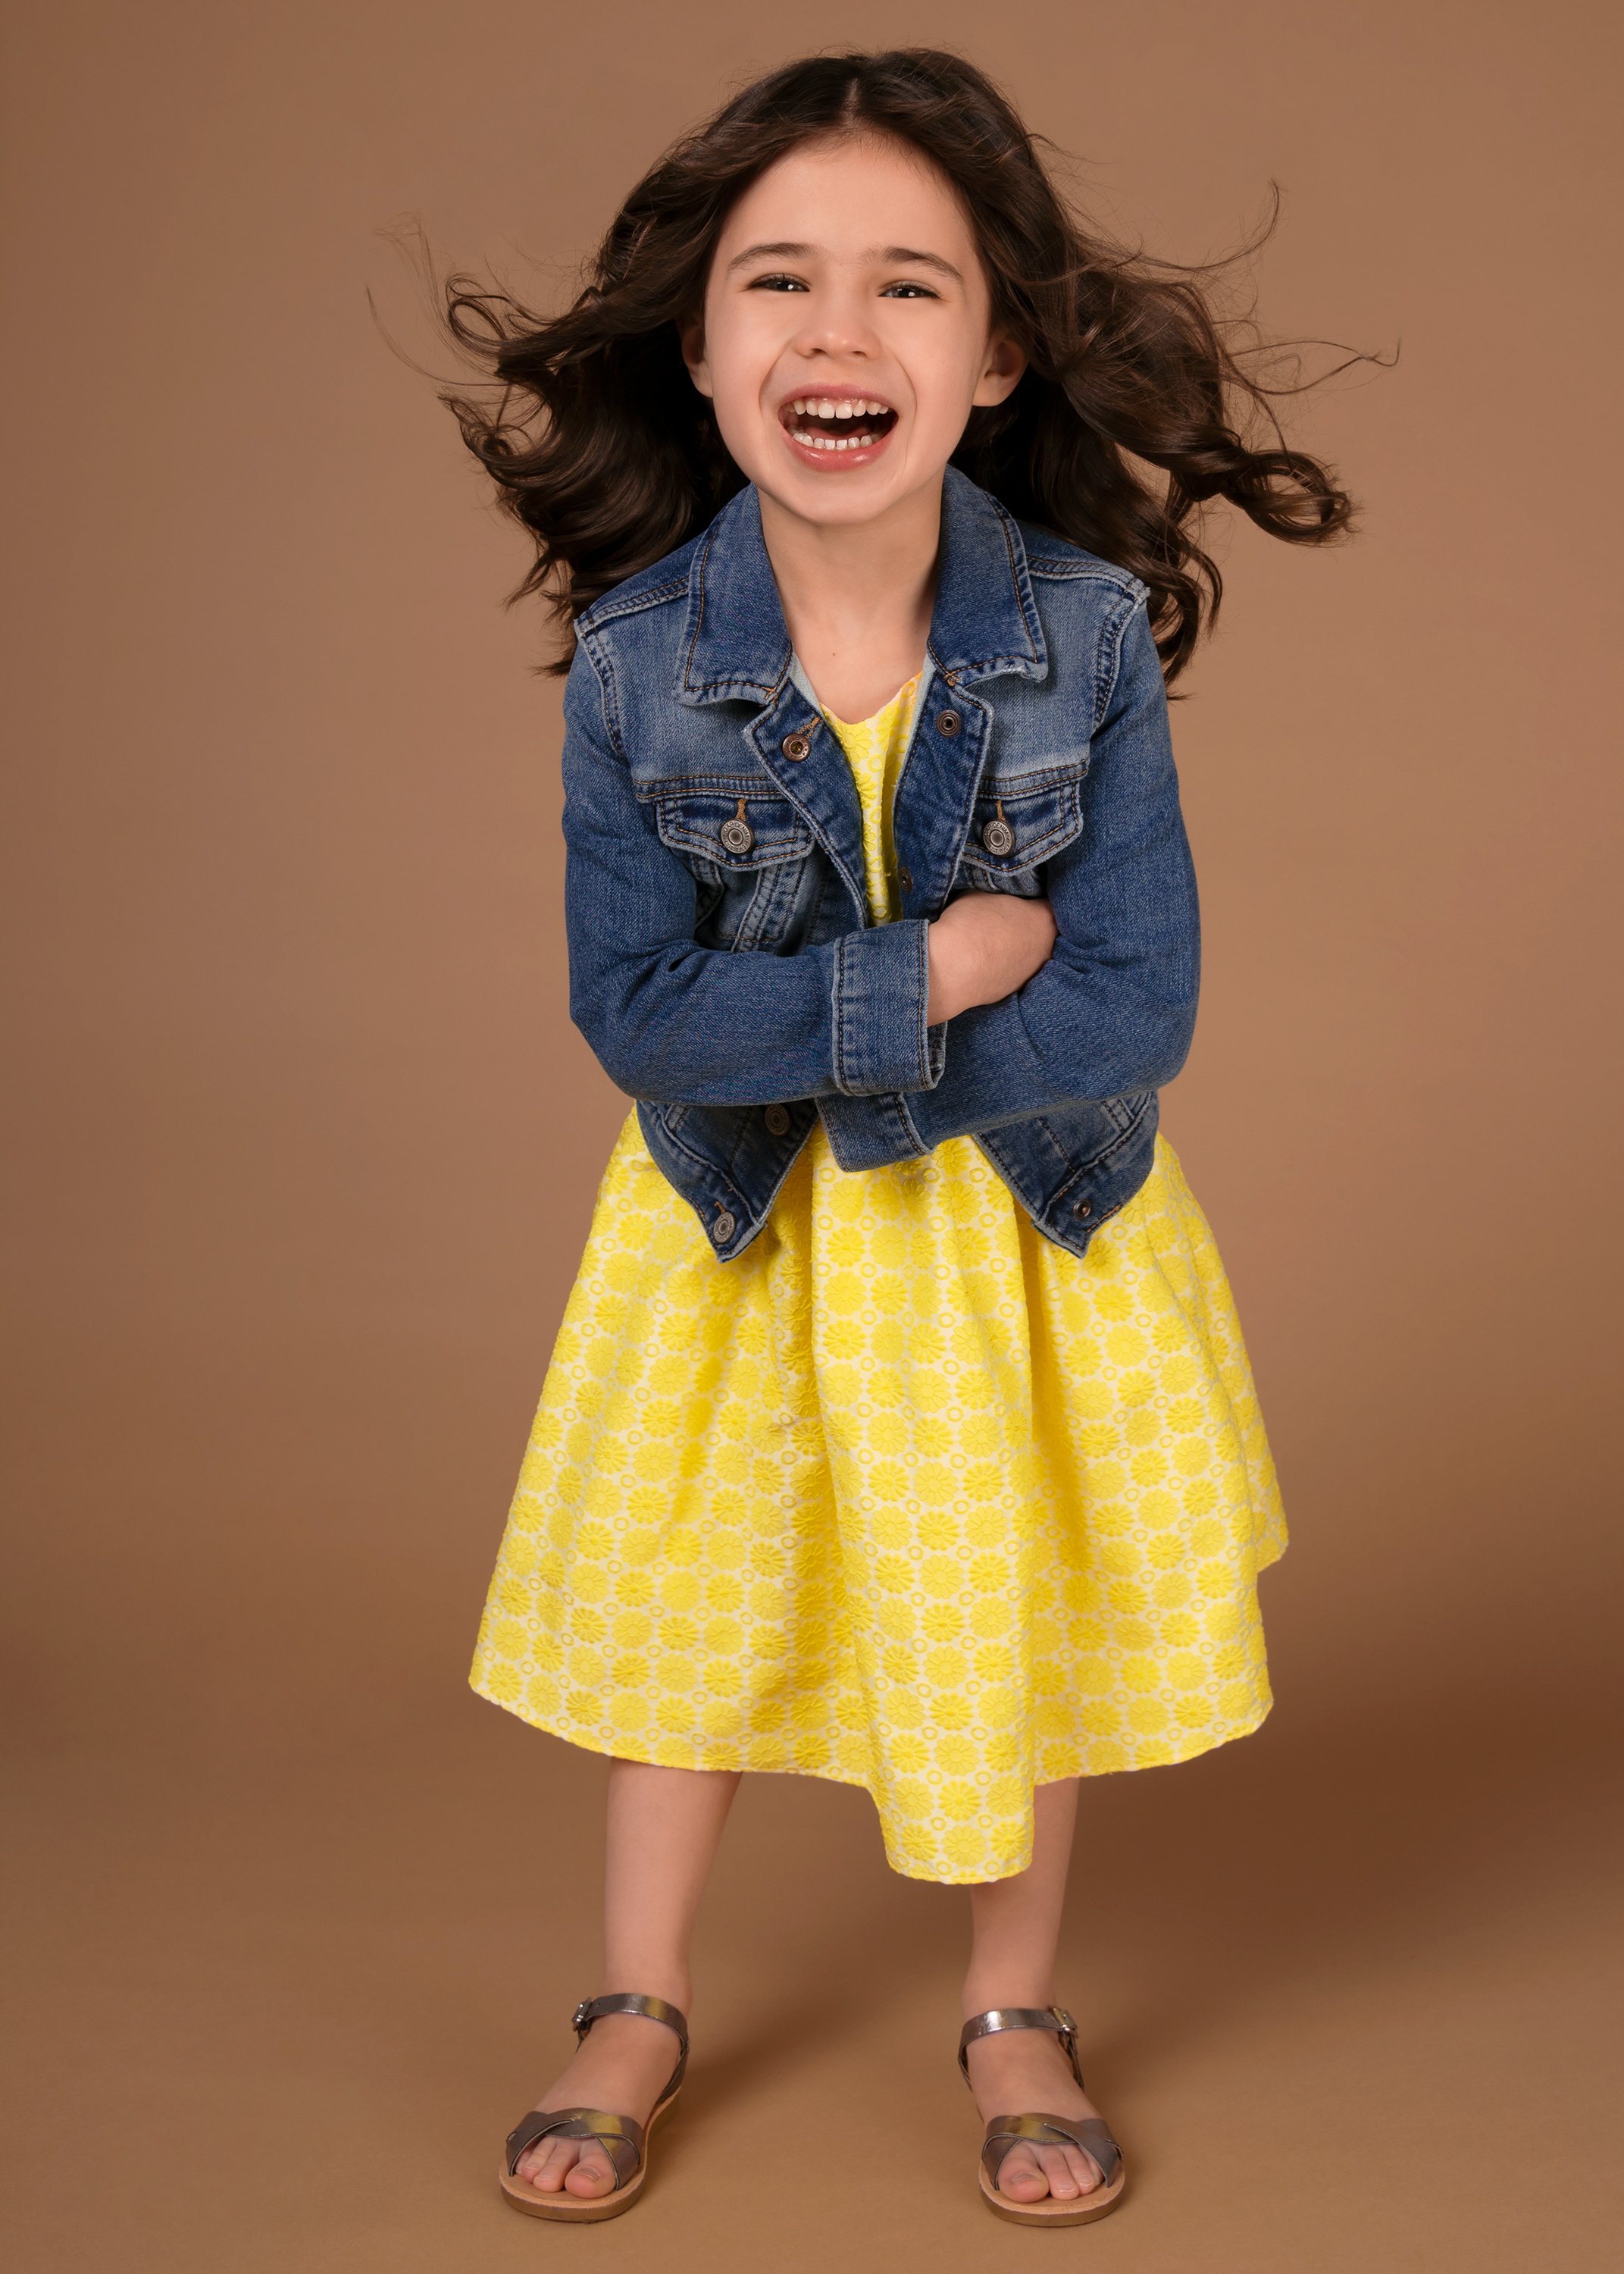 laughing-girl-kid-model-agency-commercial